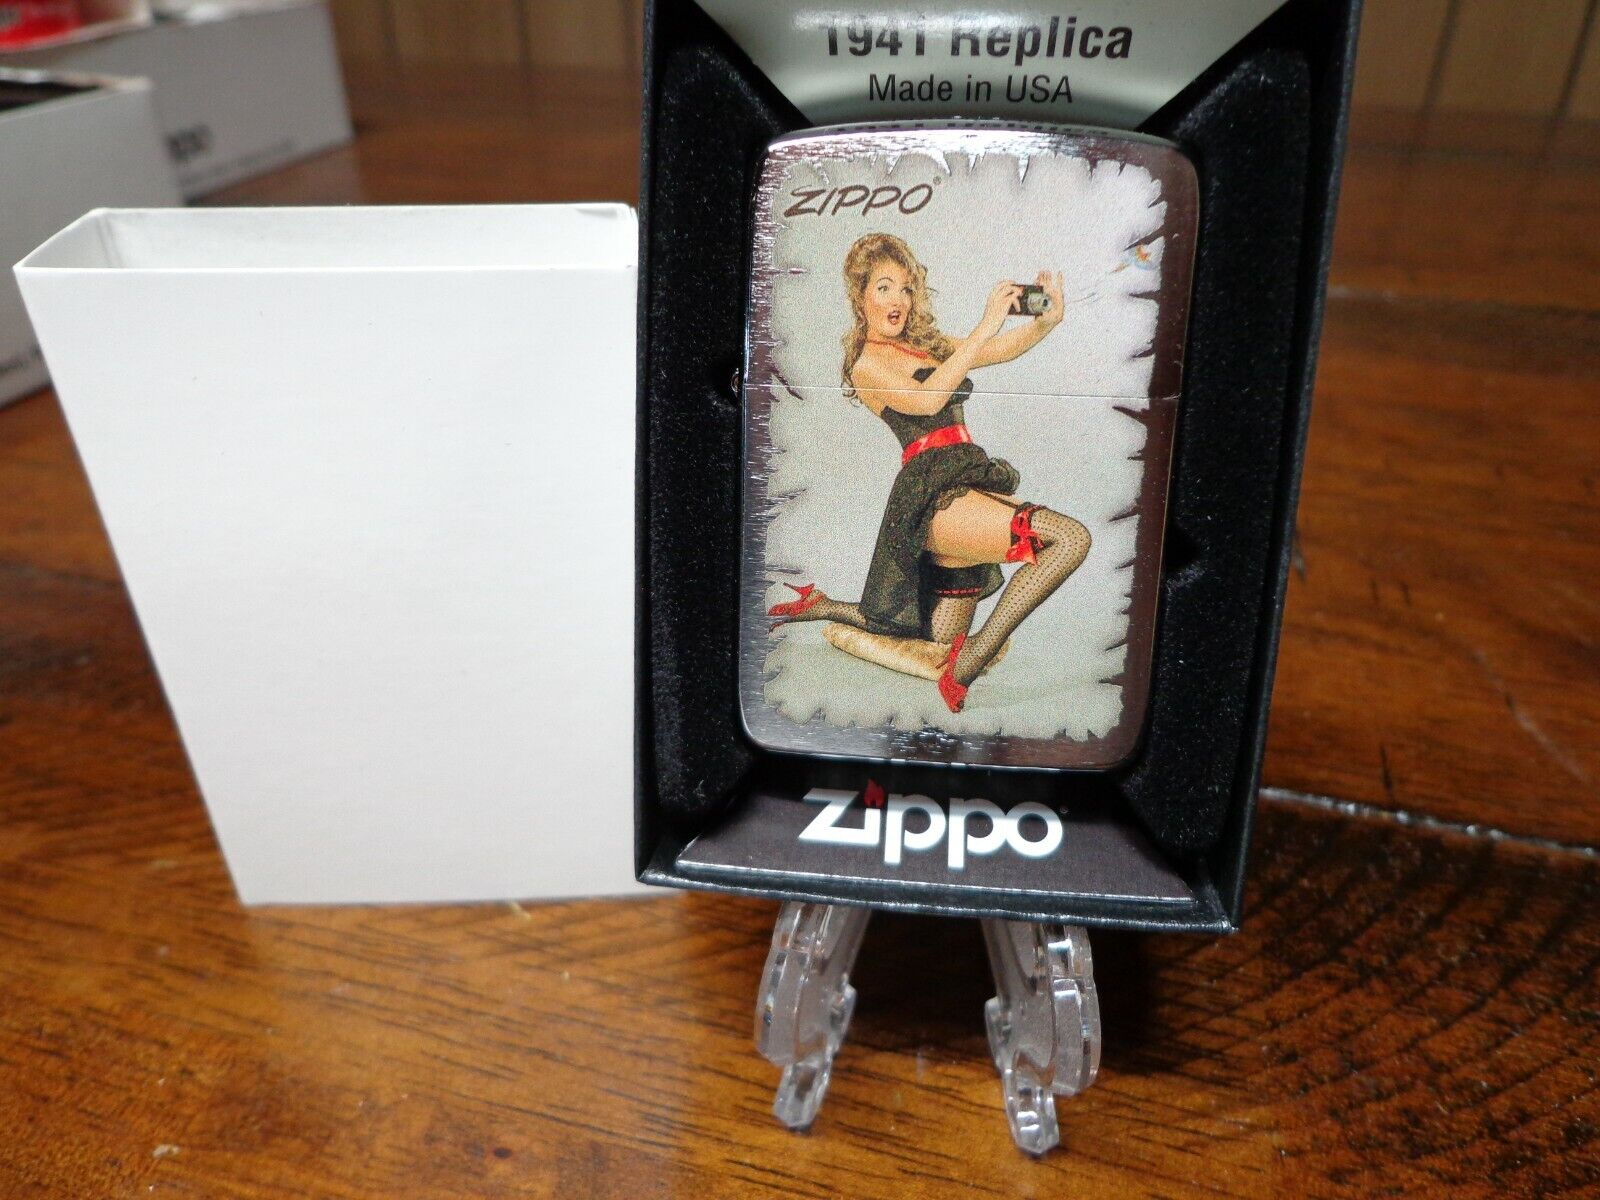 Sexy Pinup Girl Photographer 1941 Replica Model Zippo Lighter Mint In Box